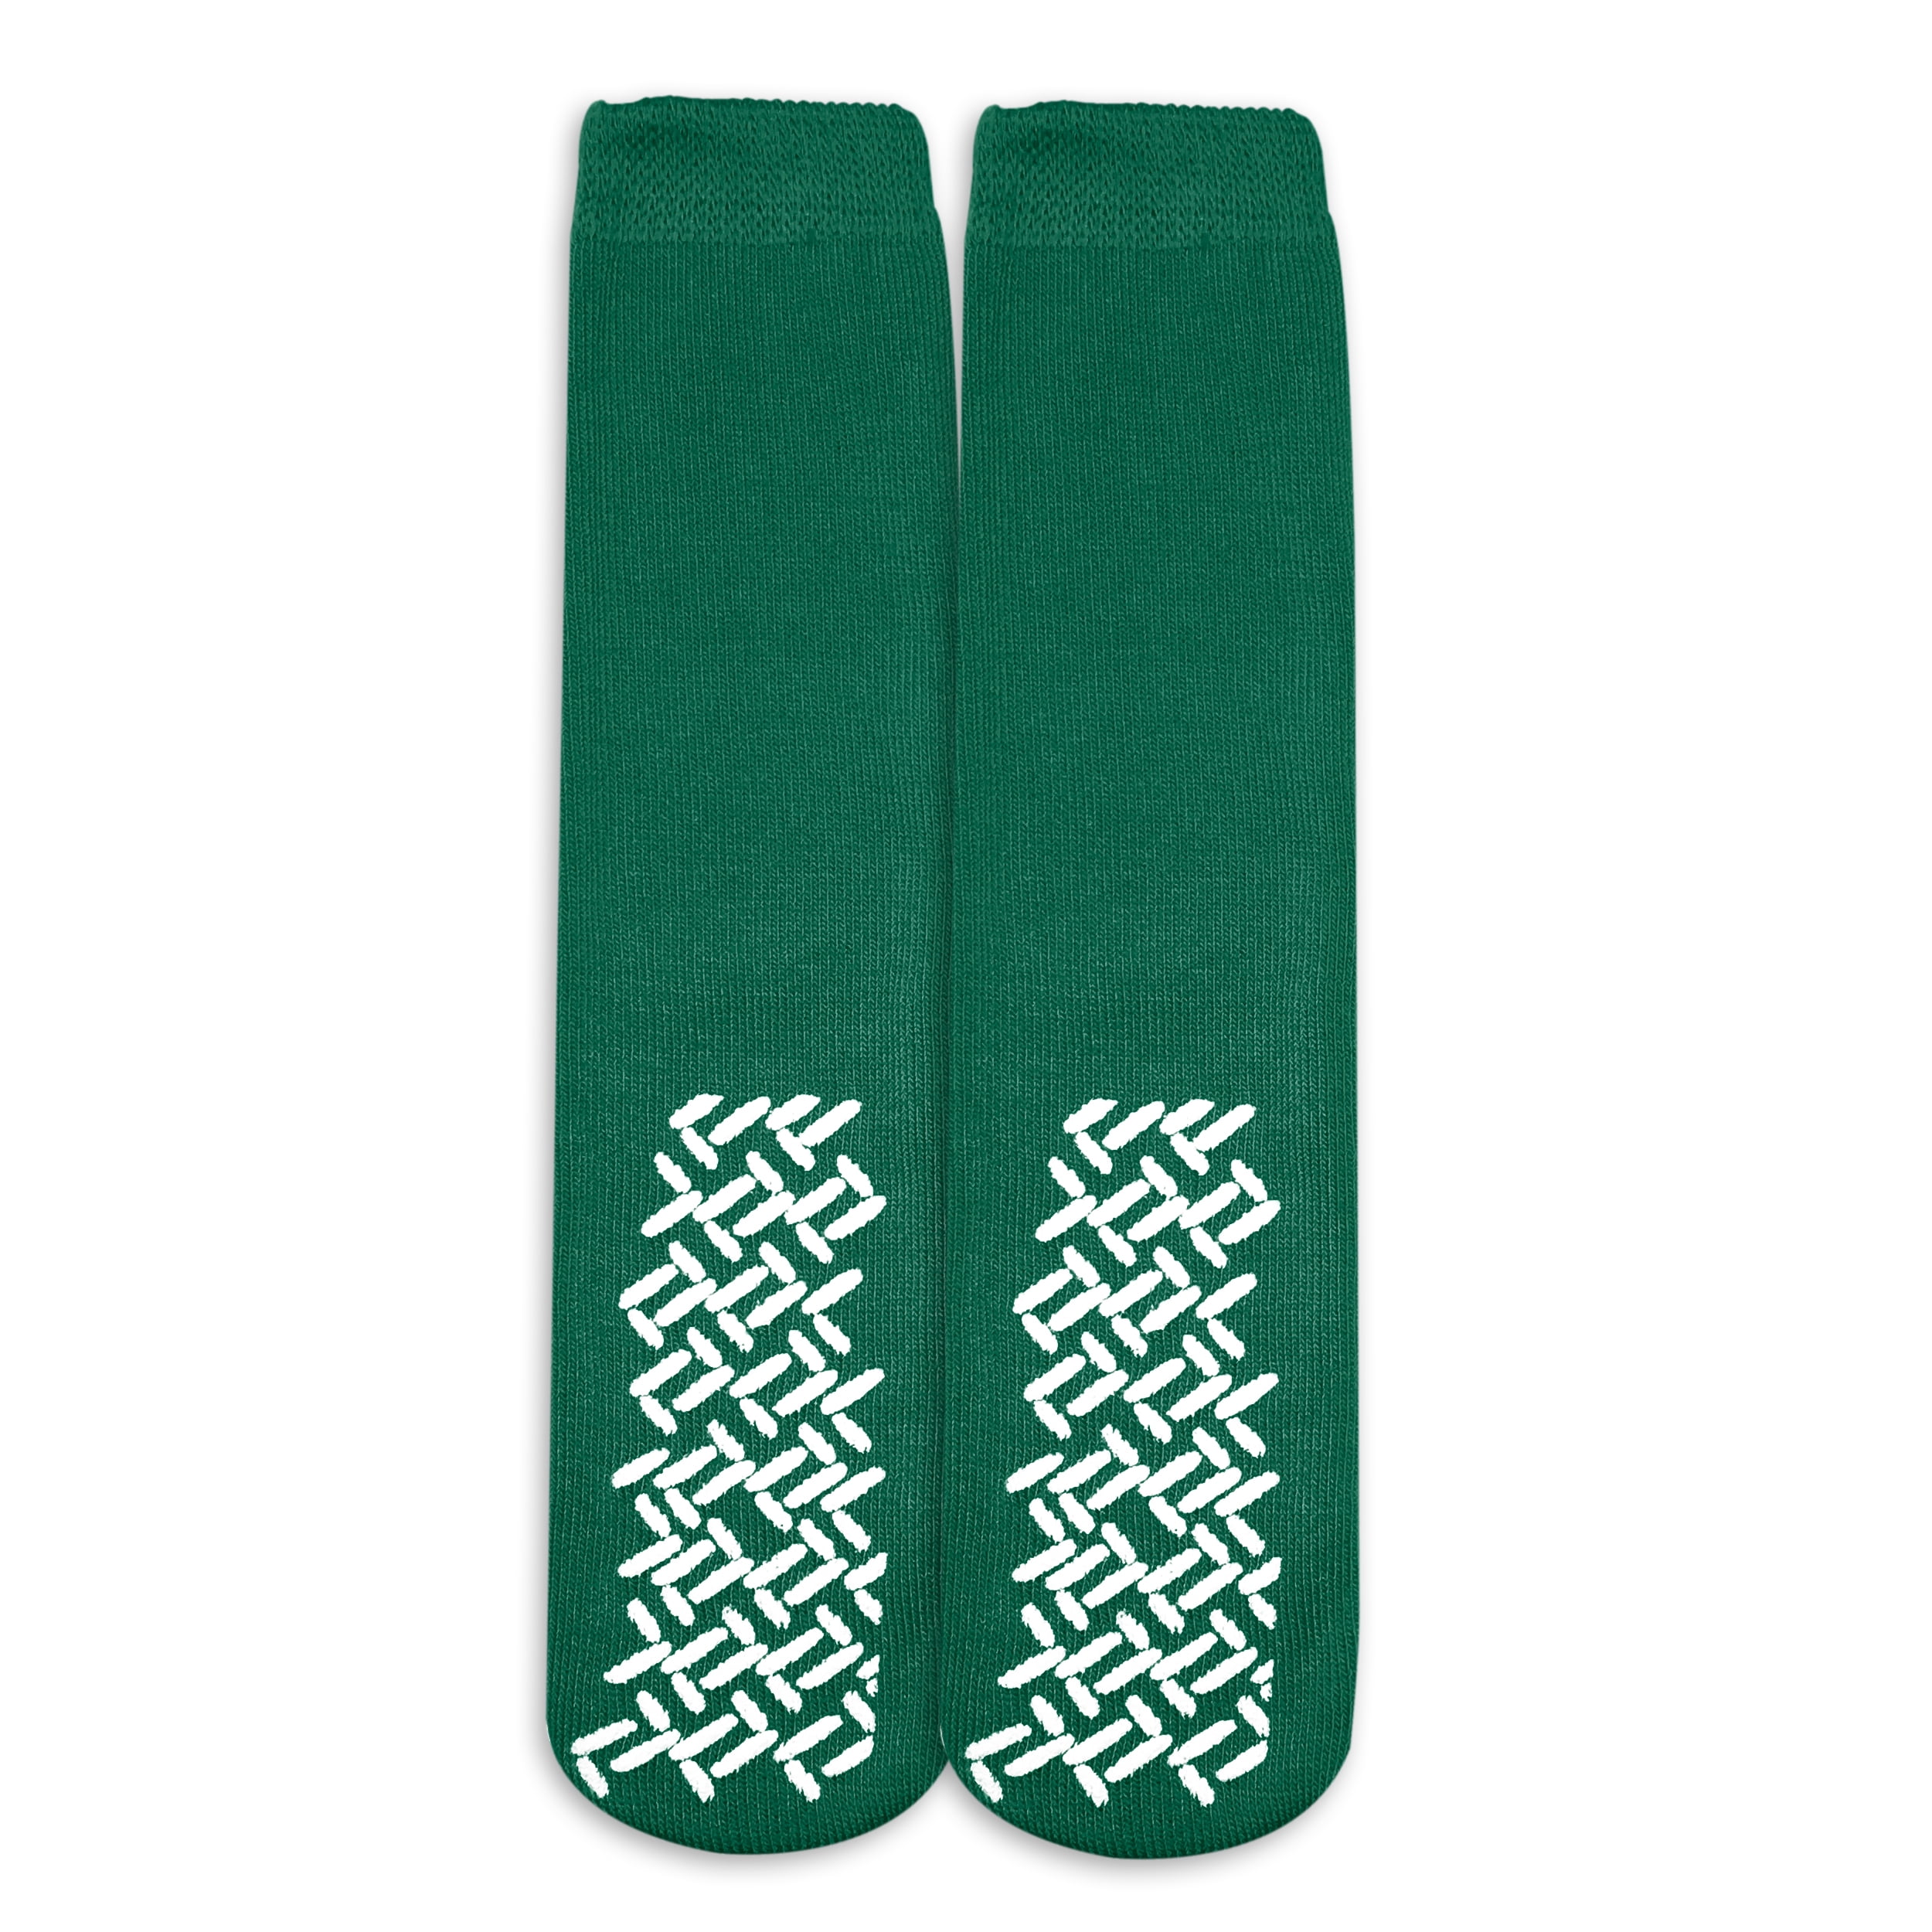 Nobles Assorted Anti Skid/ No Slip Hospital Gripper Socks, Great for